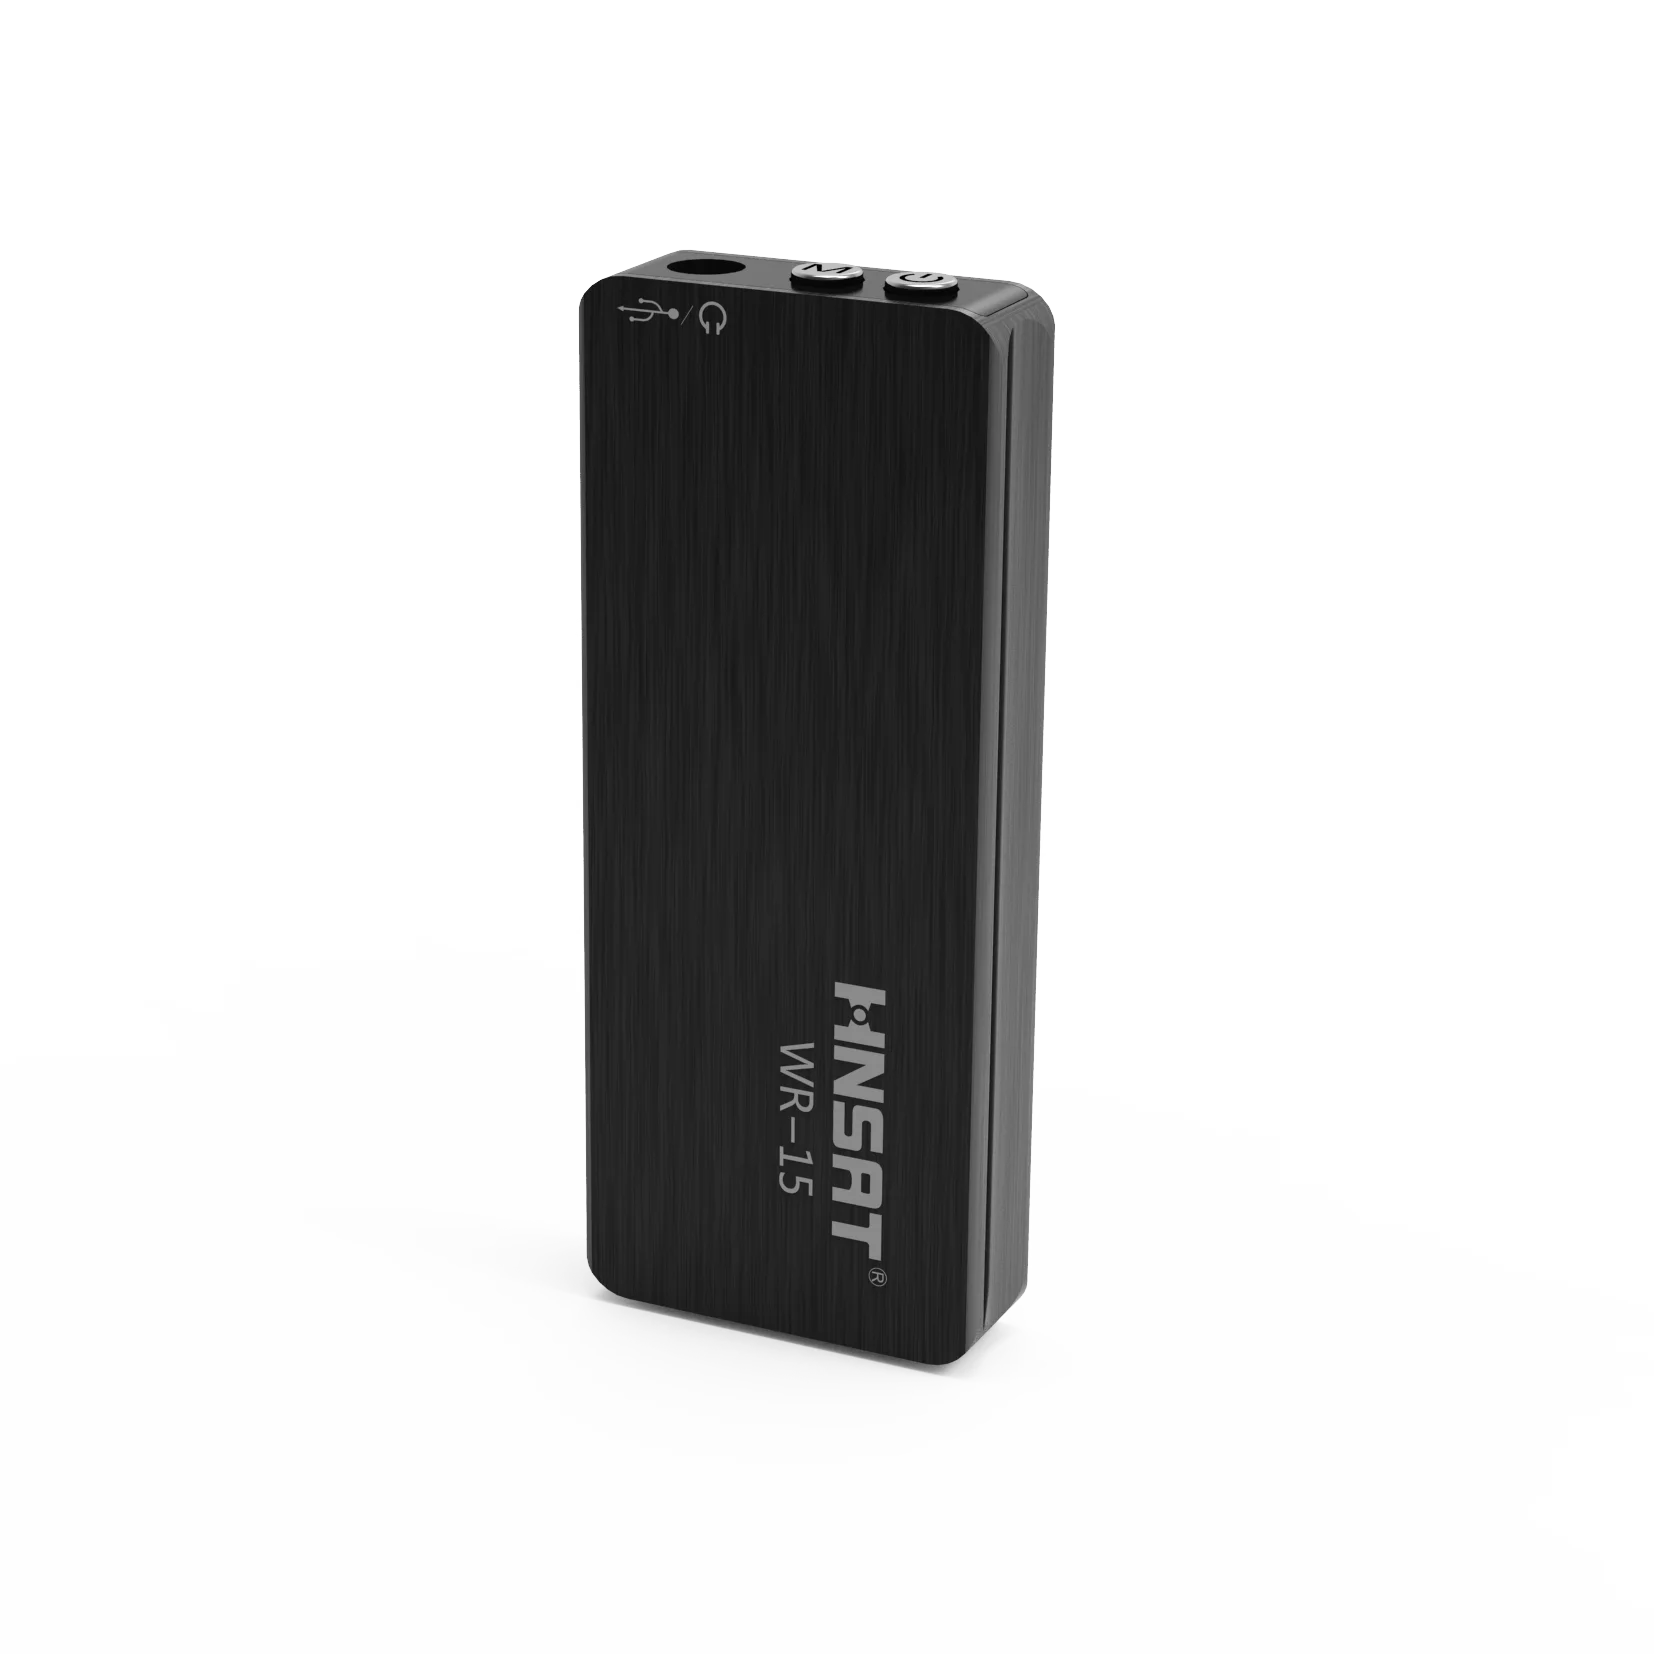 product-Hnsat-Mini Voice Activated Recorder Slim USB Flash Drive USB Memory Stick Sound Recorder WR--1